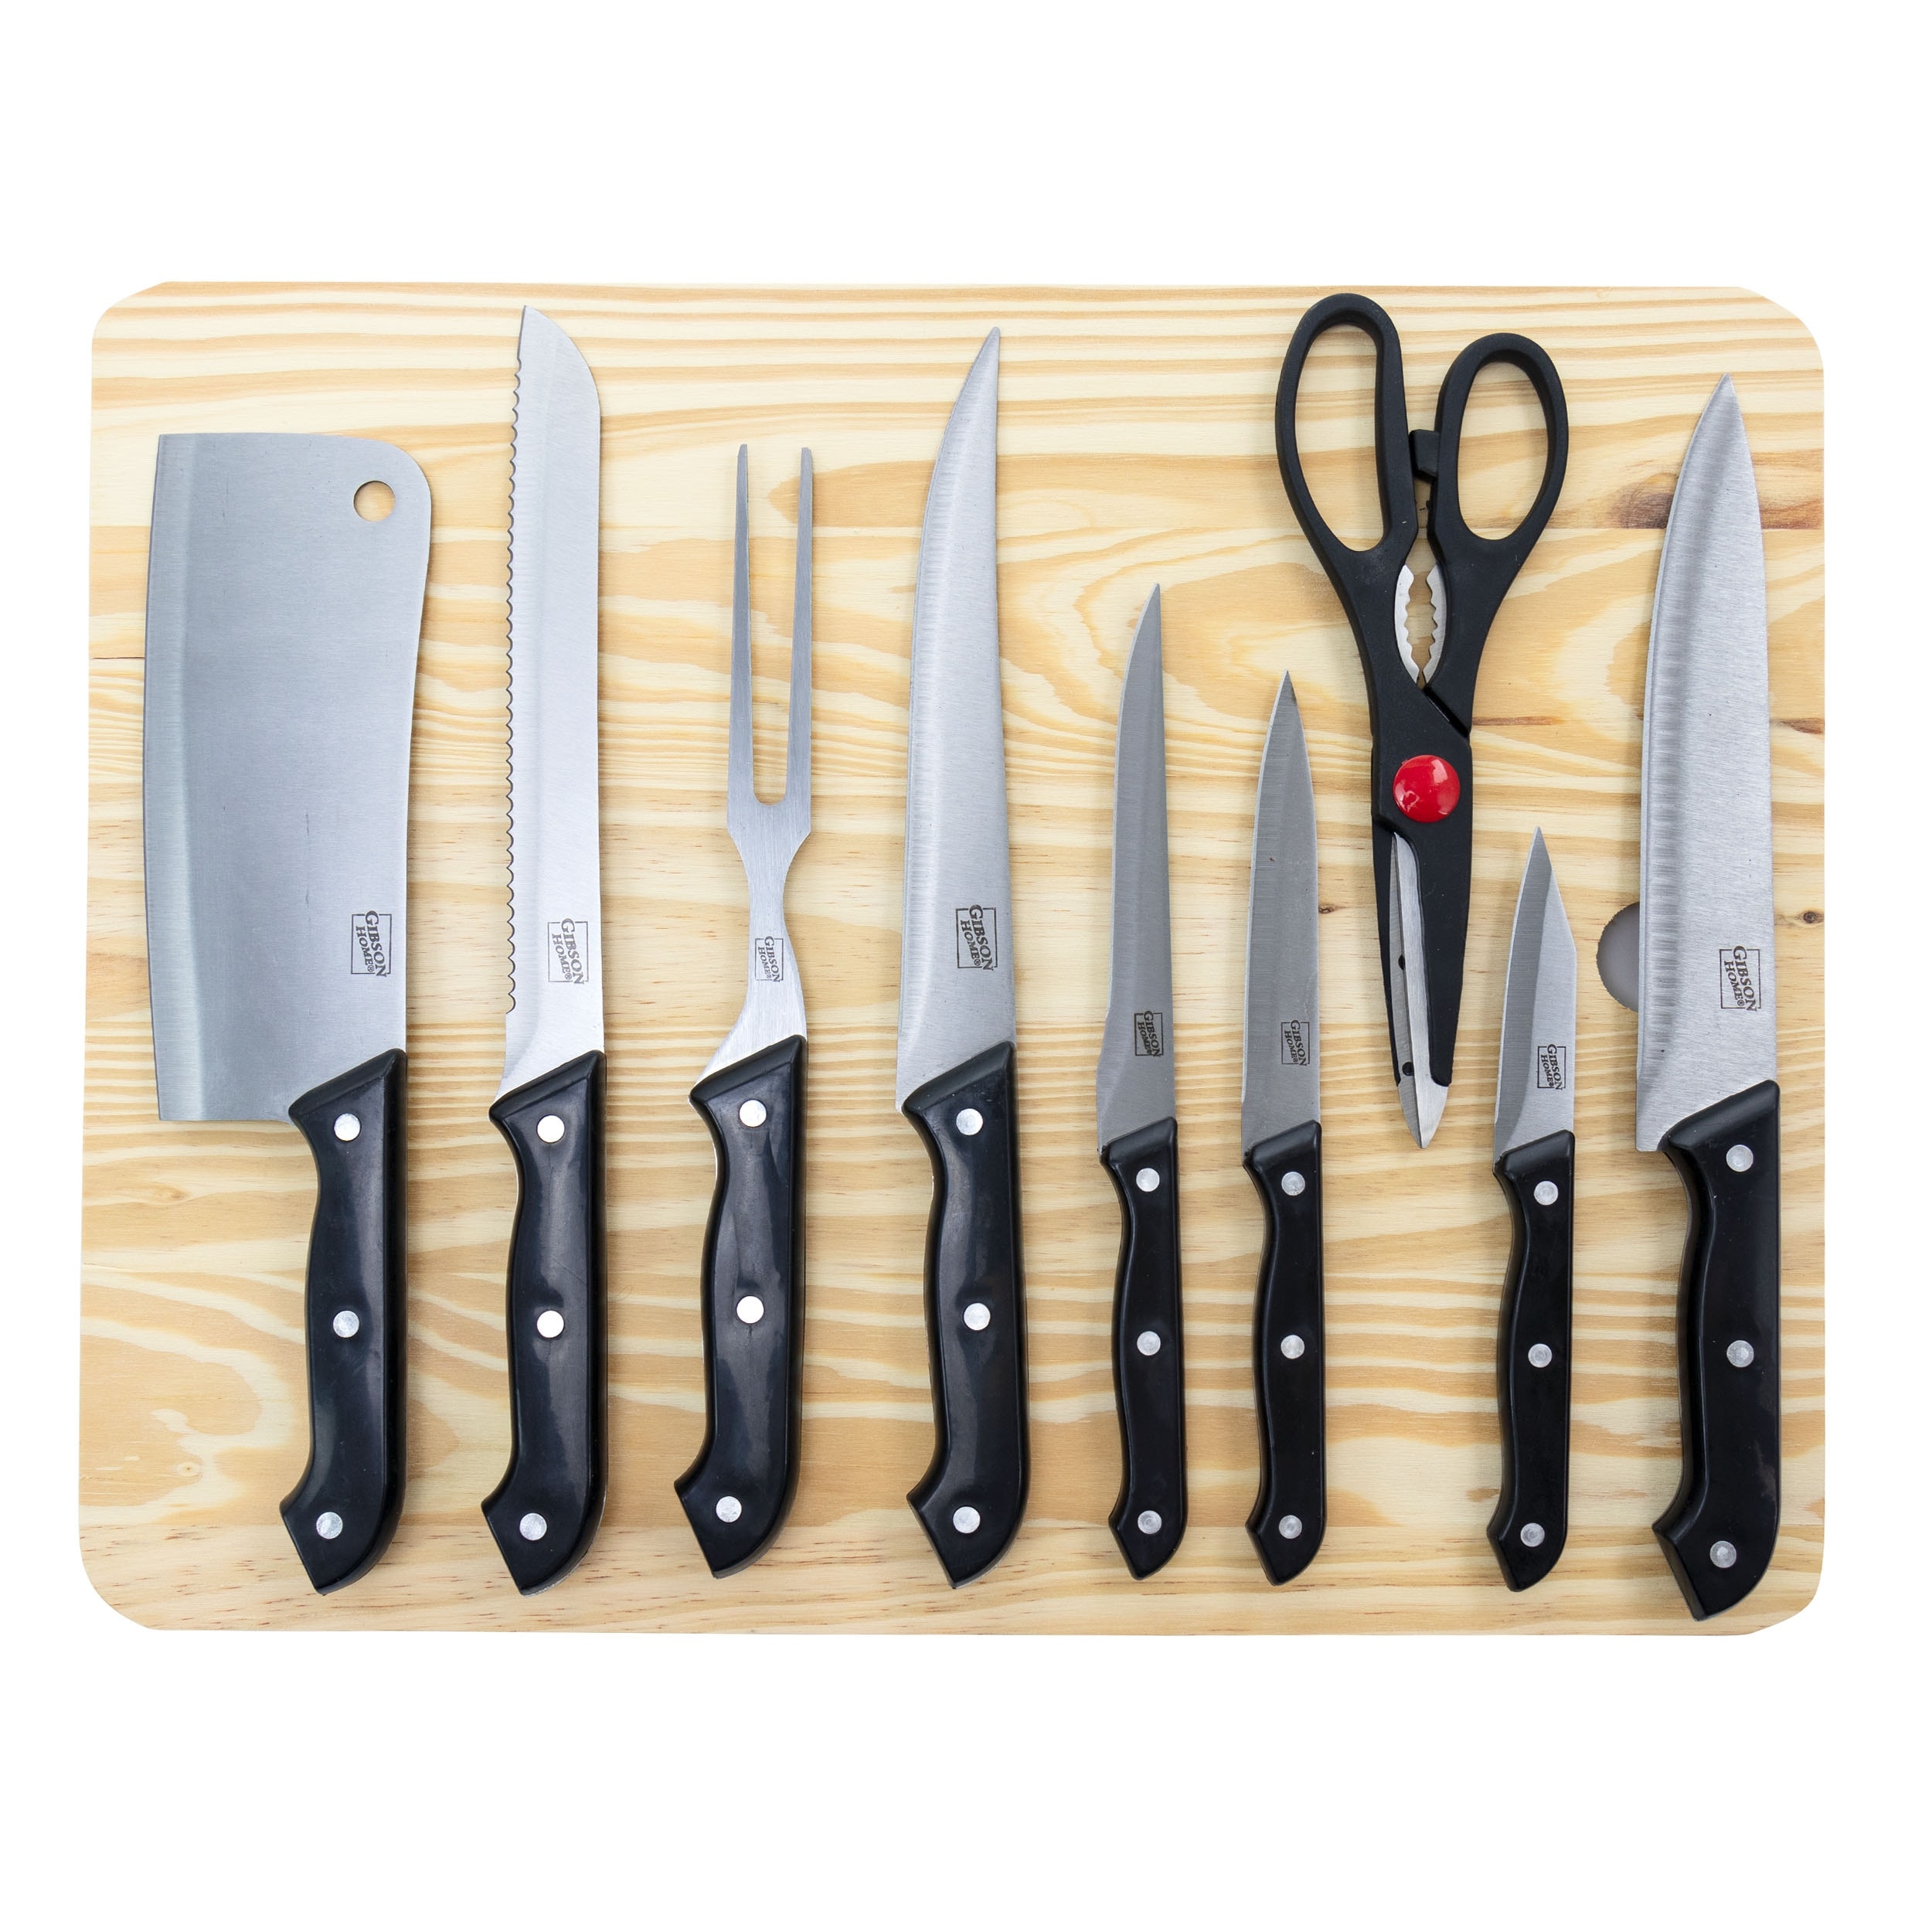 Cuisinart 10 Pc. Pakka Wood Professional Series Cutlery Block Set, Cutlery, Household